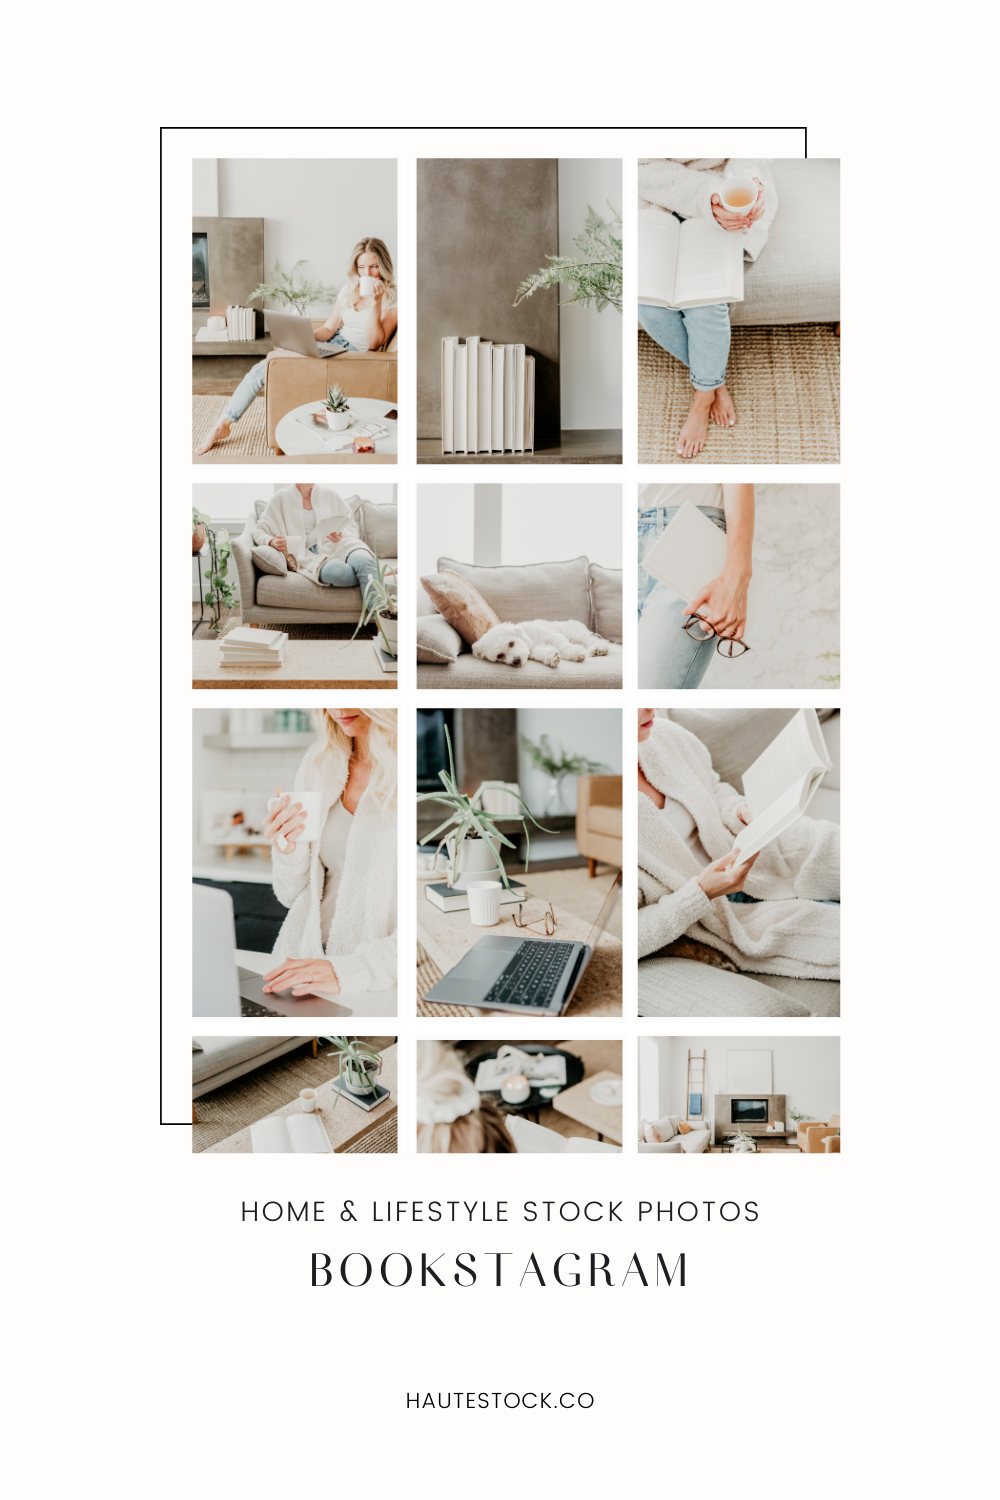 Cozy work from home stock image for female entrepreneurs